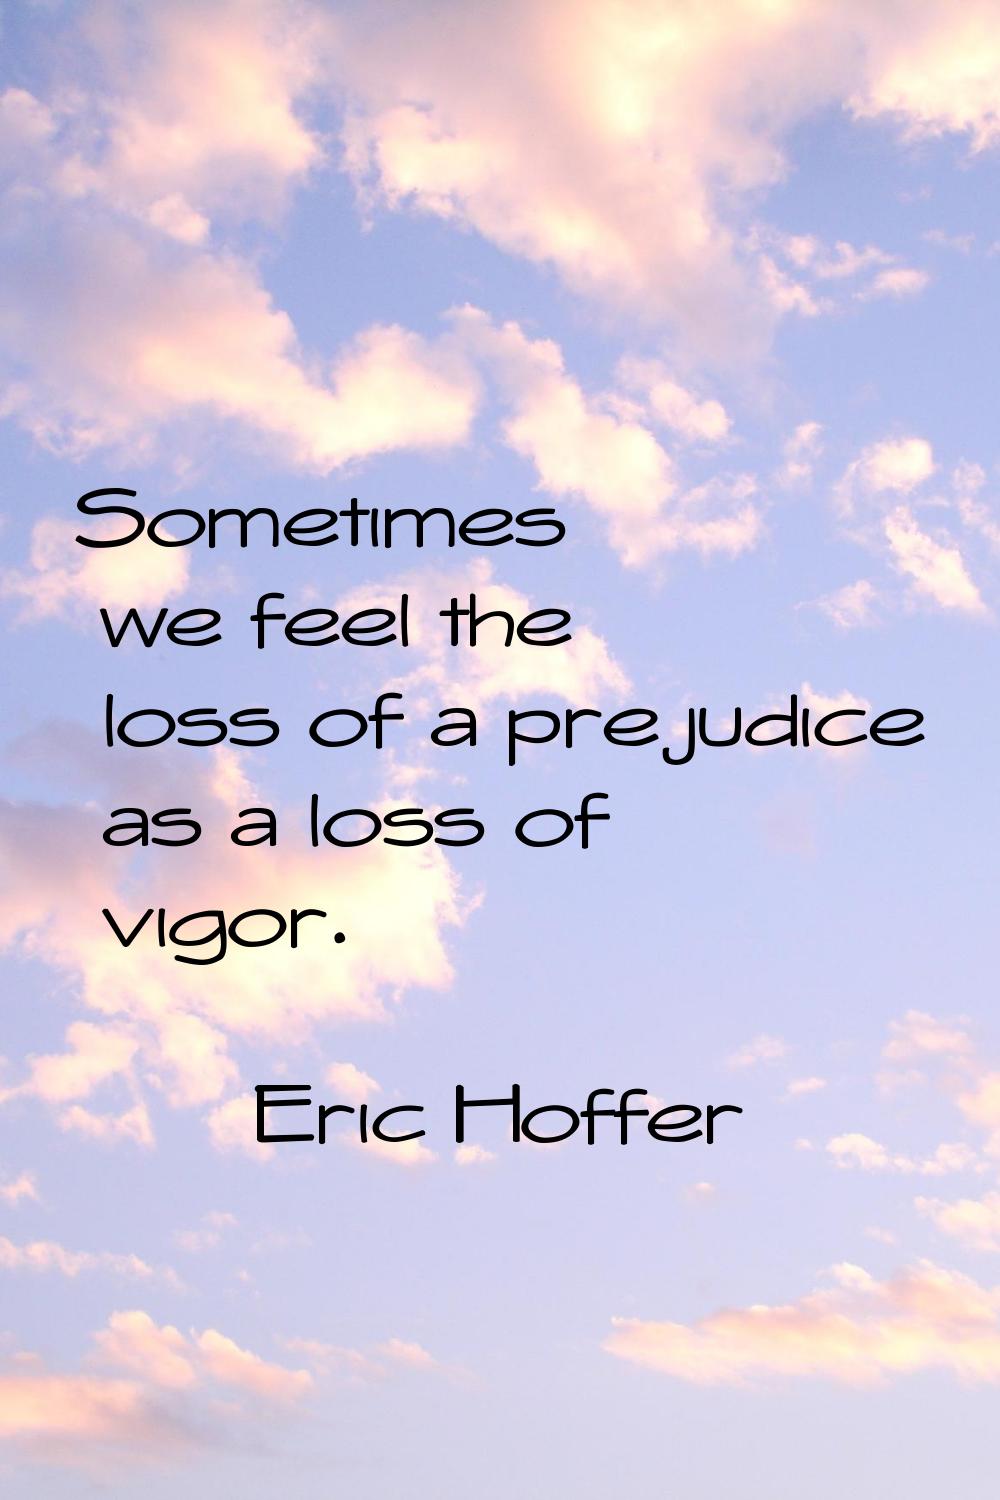 Sometimes we feel the loss of a prejudice as a loss of vigor.